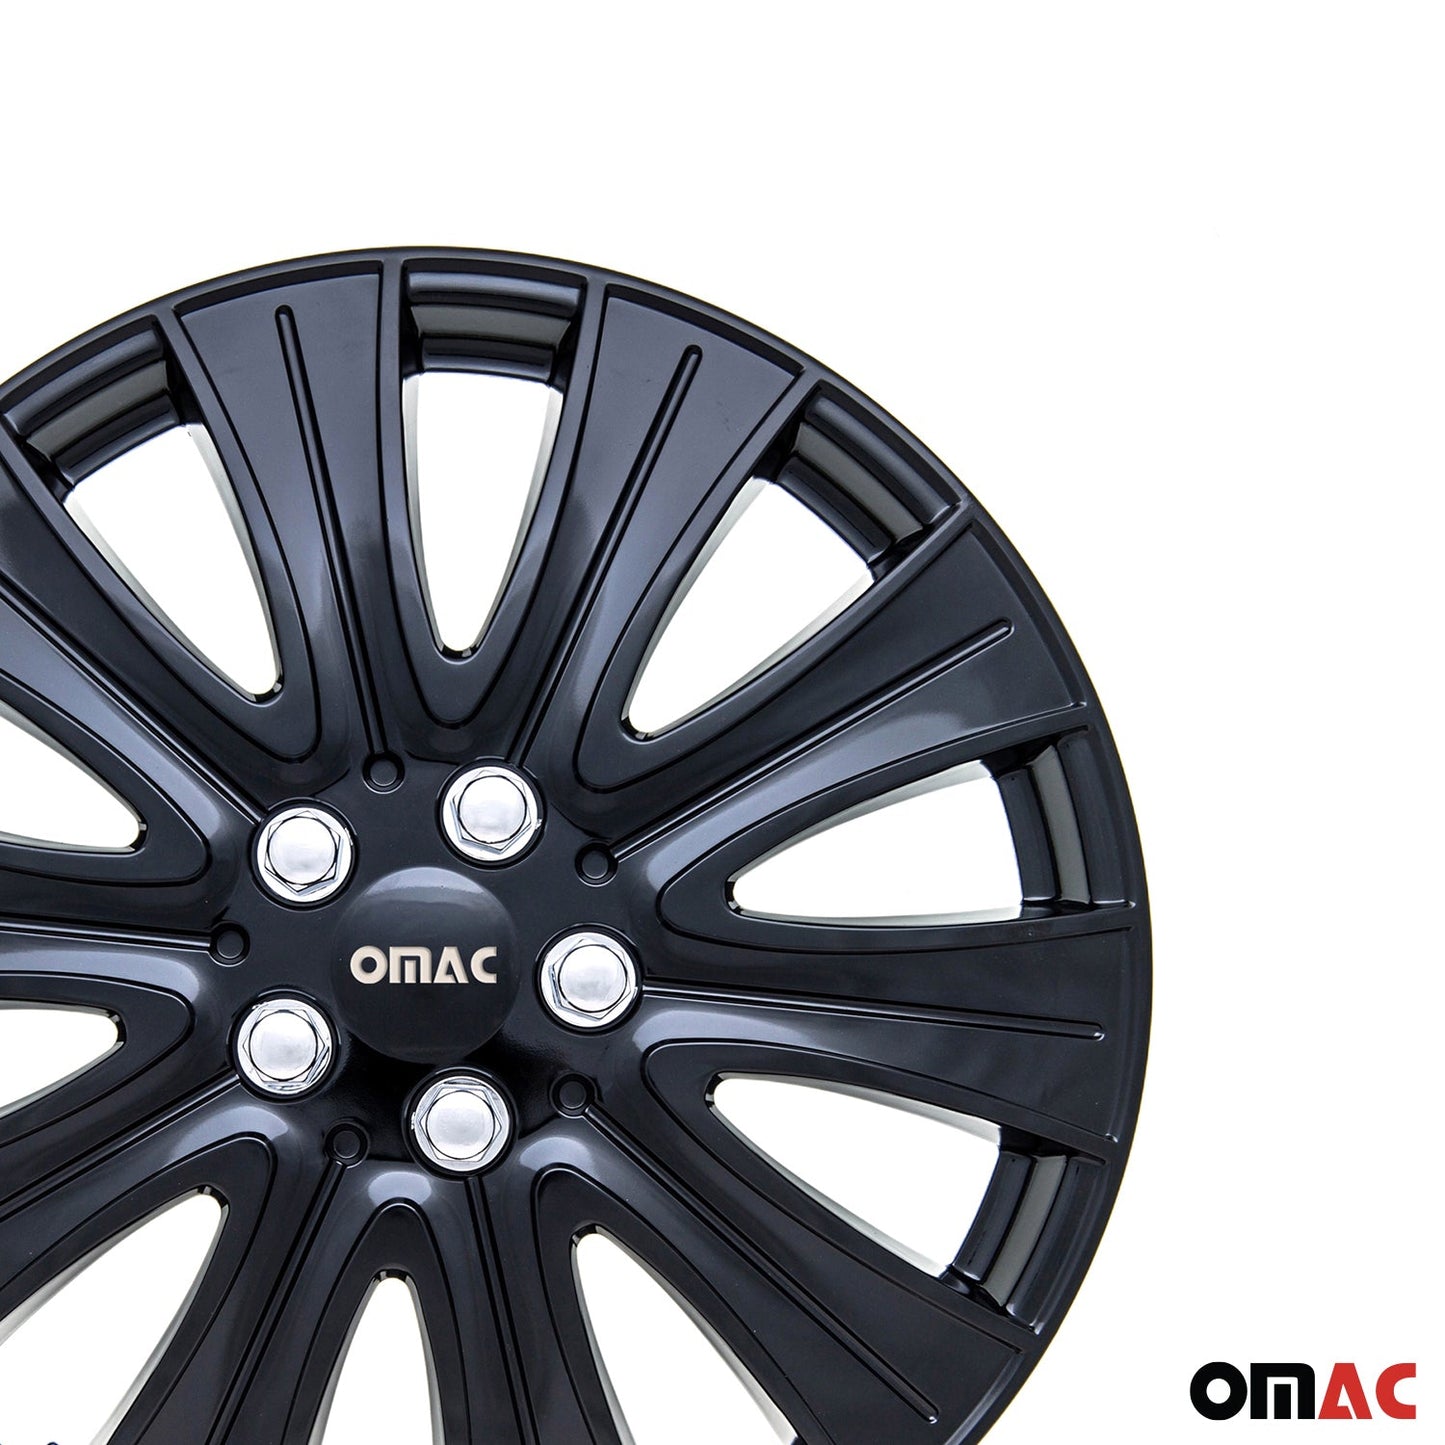 OMAC 15" Wheel Covers Guard Hub Caps Durable Snap On ABS Gloss Black Silver 4x OMAC-WE40-GBK15